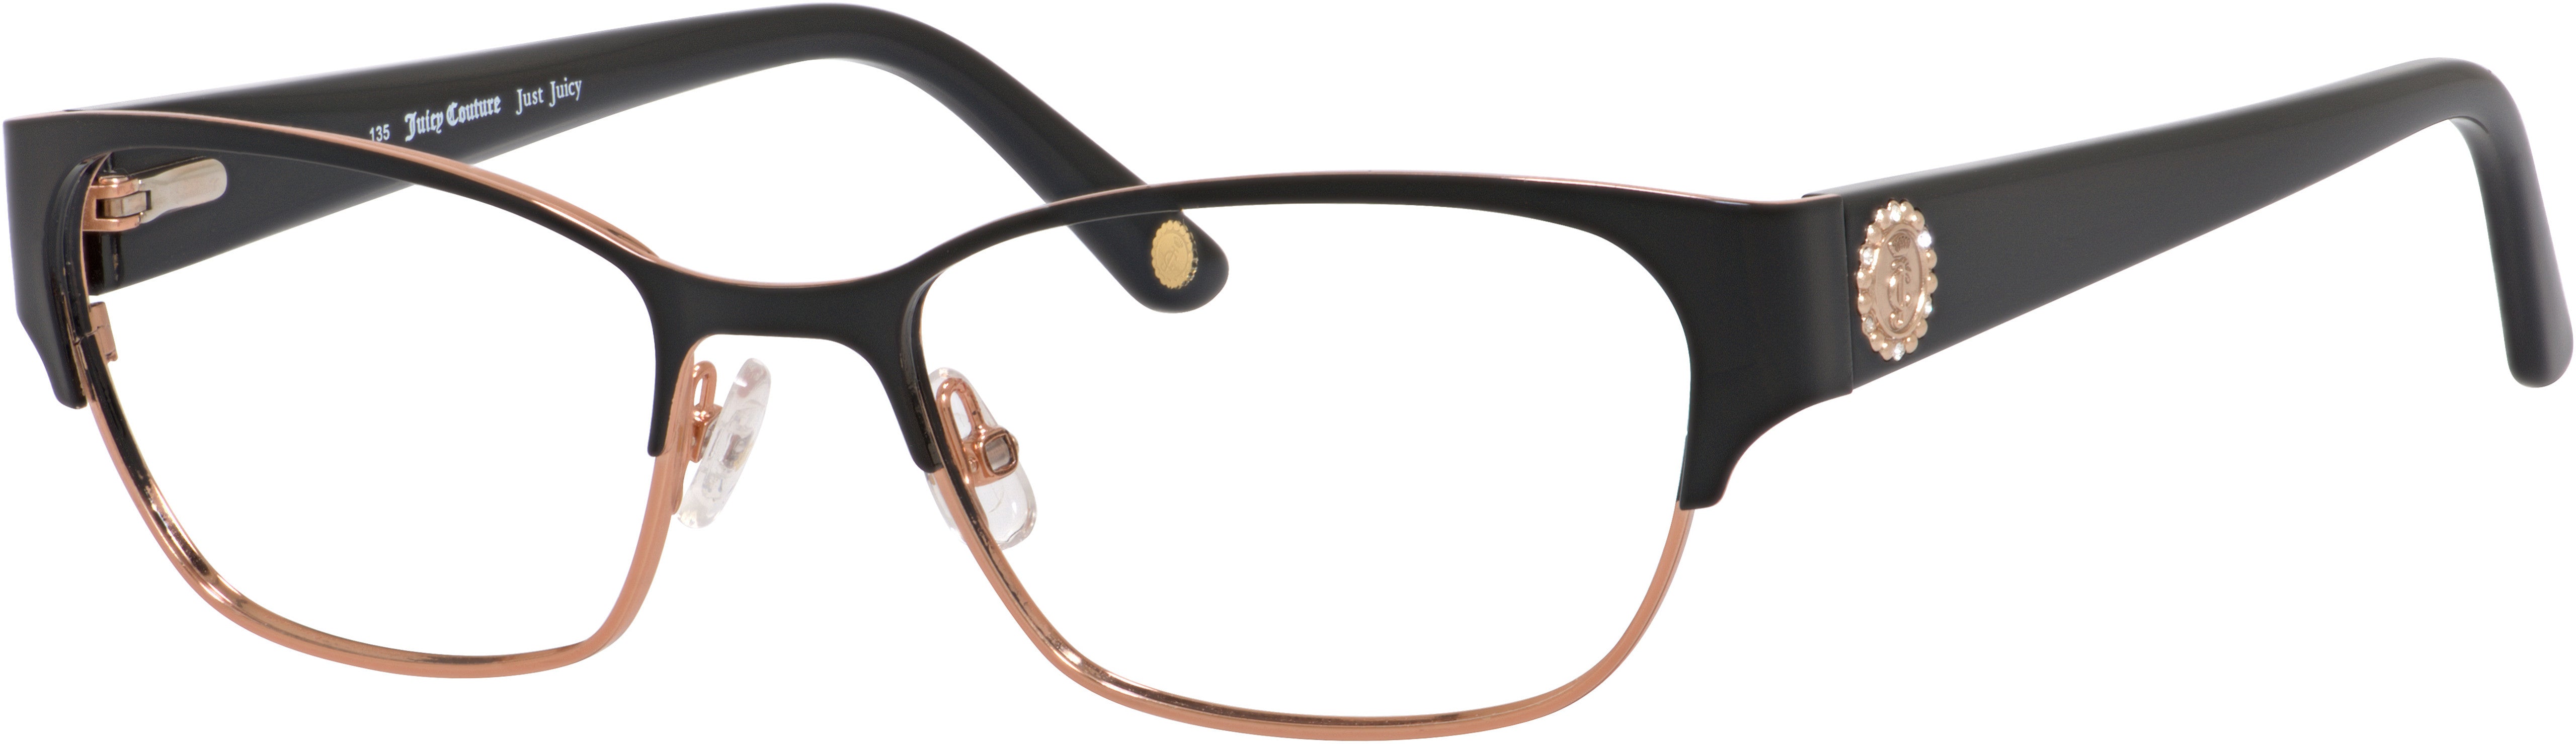 Juicy Couture Juicy 159 Rectangular Eyeglasses 0JSM-0JSM  Black Rose Gold (00 Demo Lens)